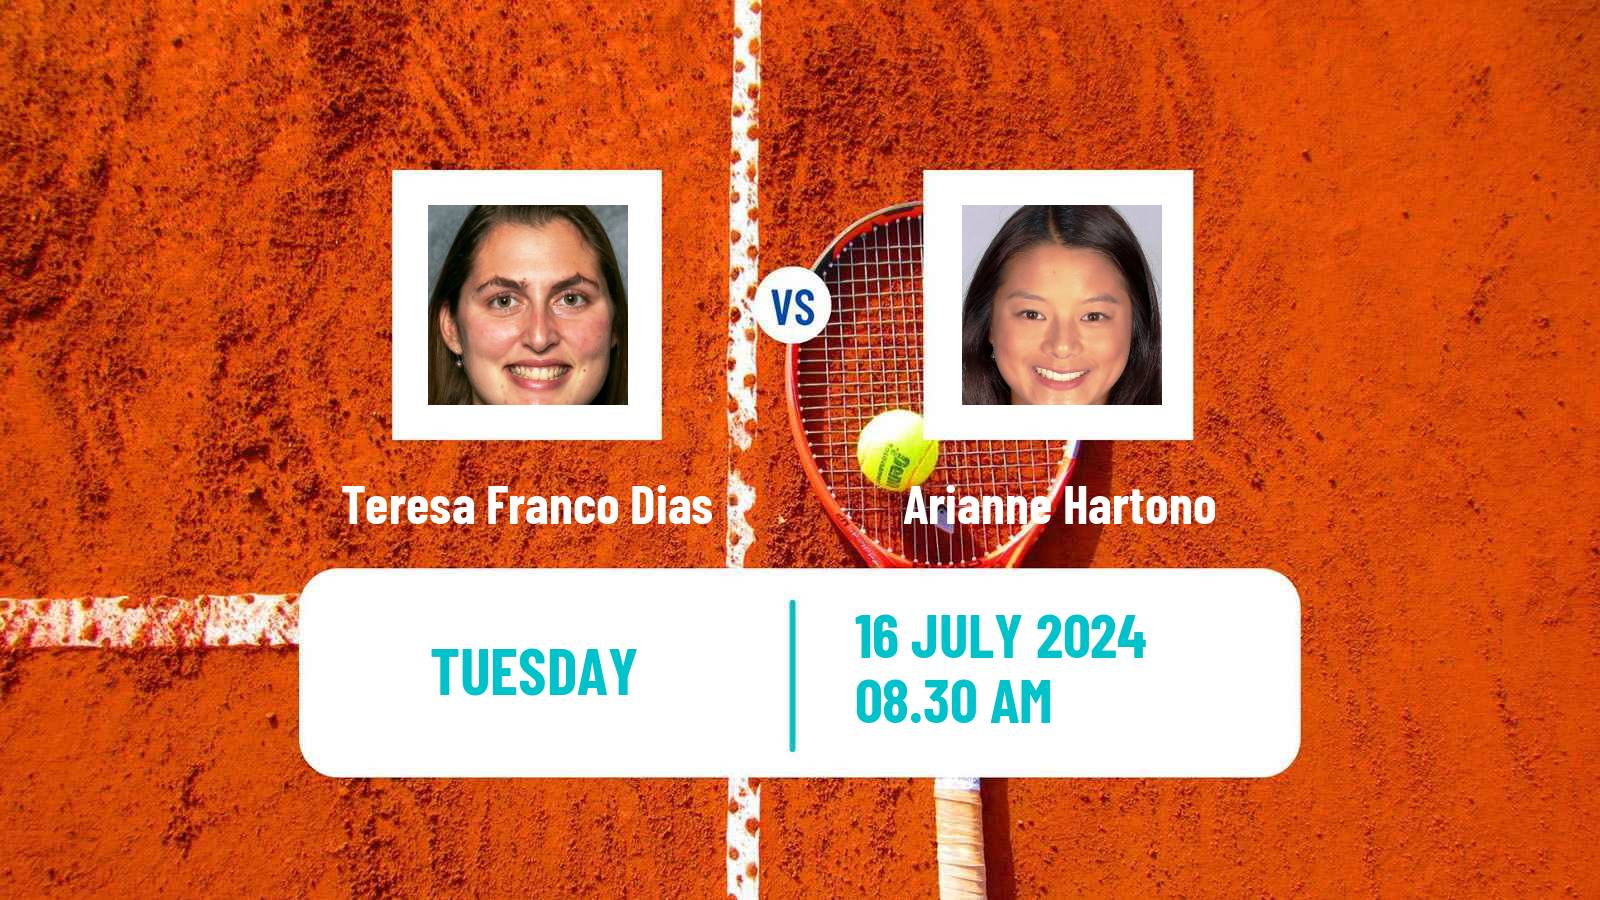 Tennis ITF W75 Porto 2 Women Teresa Franco Dias - Arianne Hartono